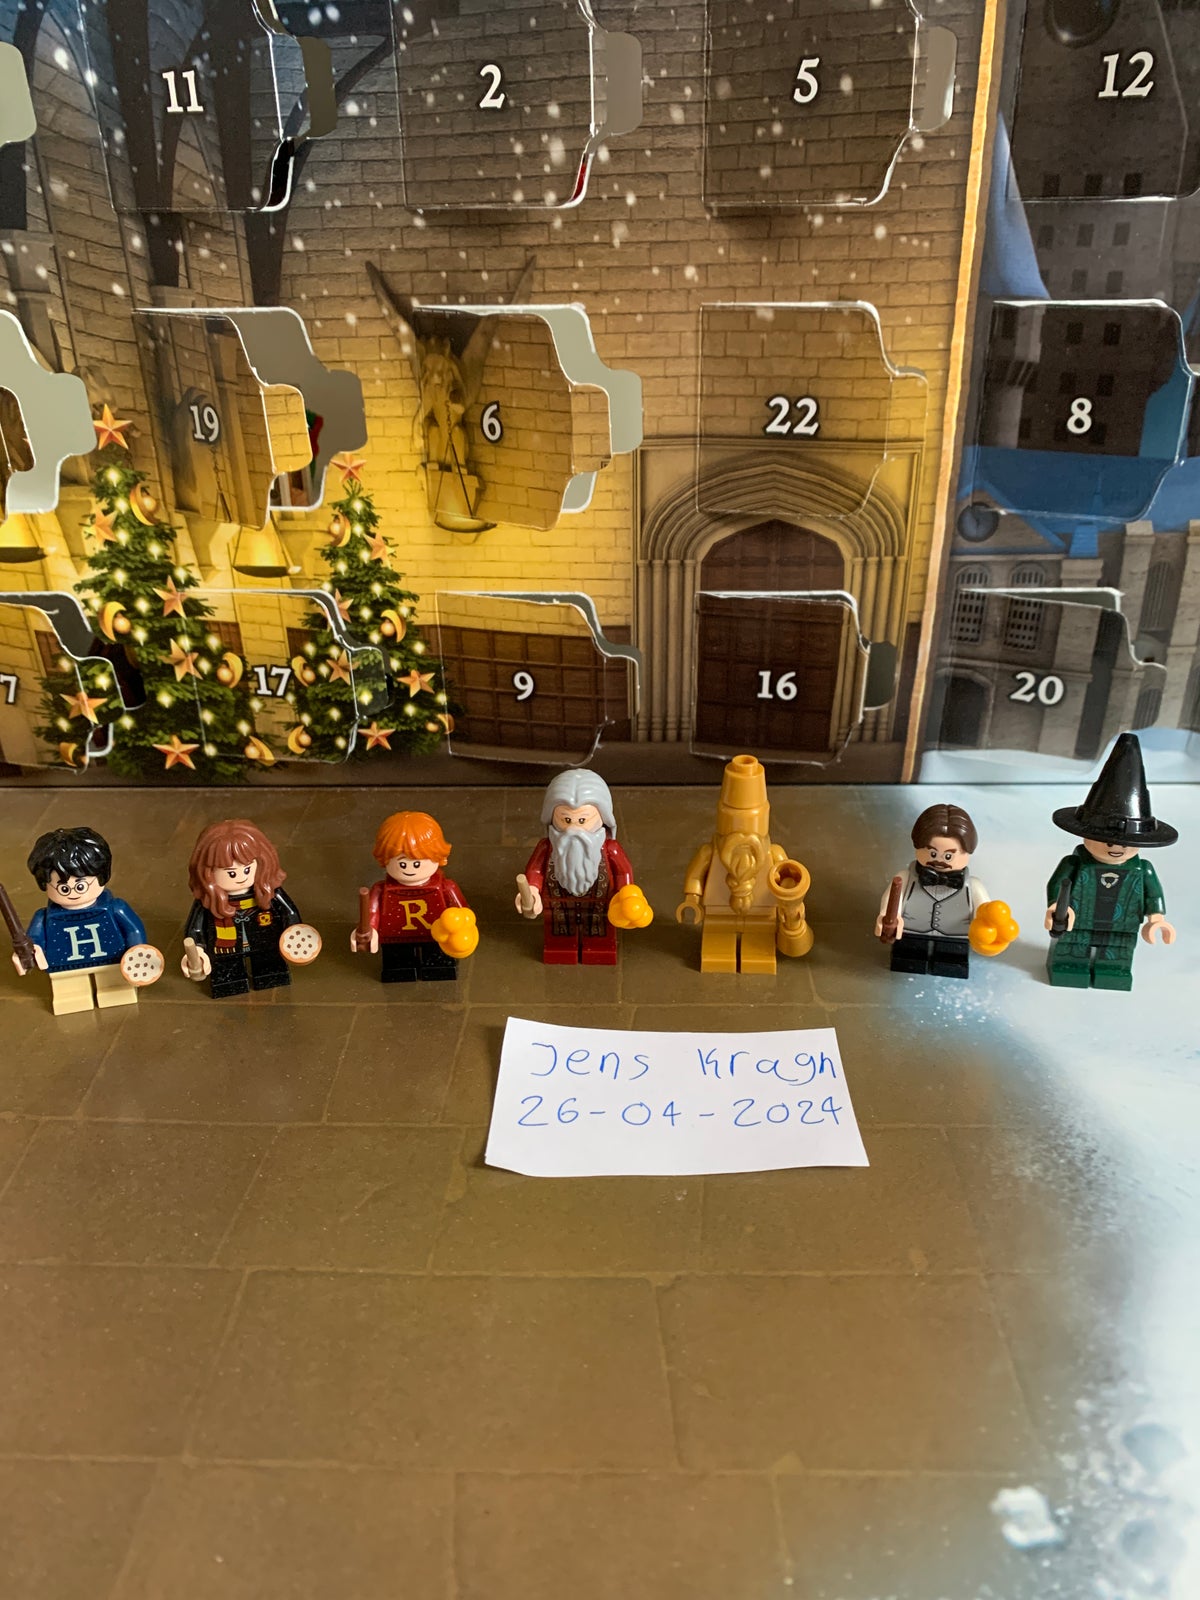 Lego Harry Potter, 75964